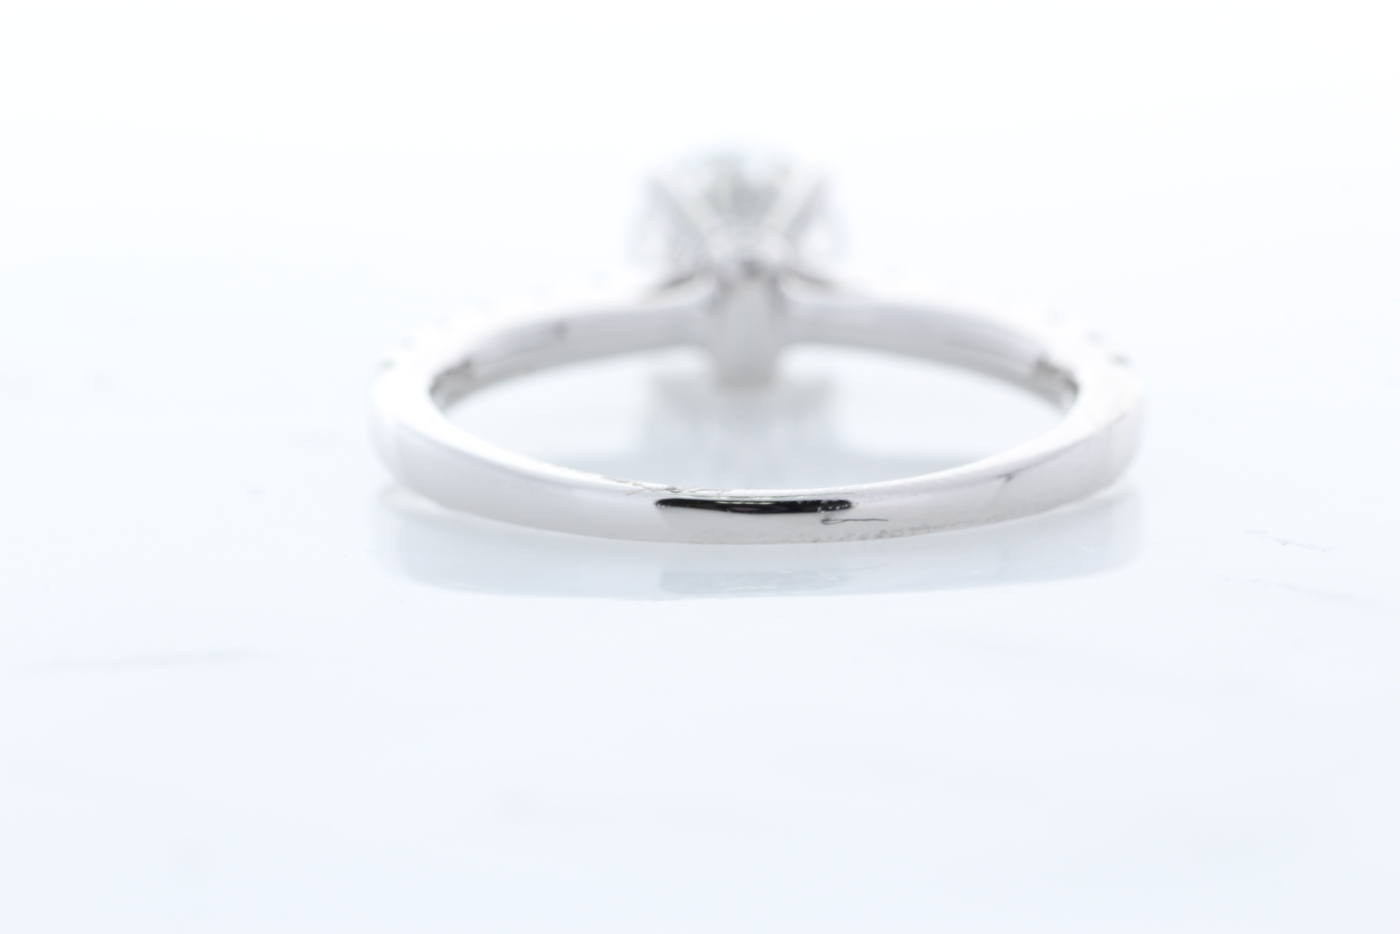 18ct White Gold Single Stone Prong Set With Stone Set Shoulders Diamond Ring (0.91) 1.29 - Image 3 of 7